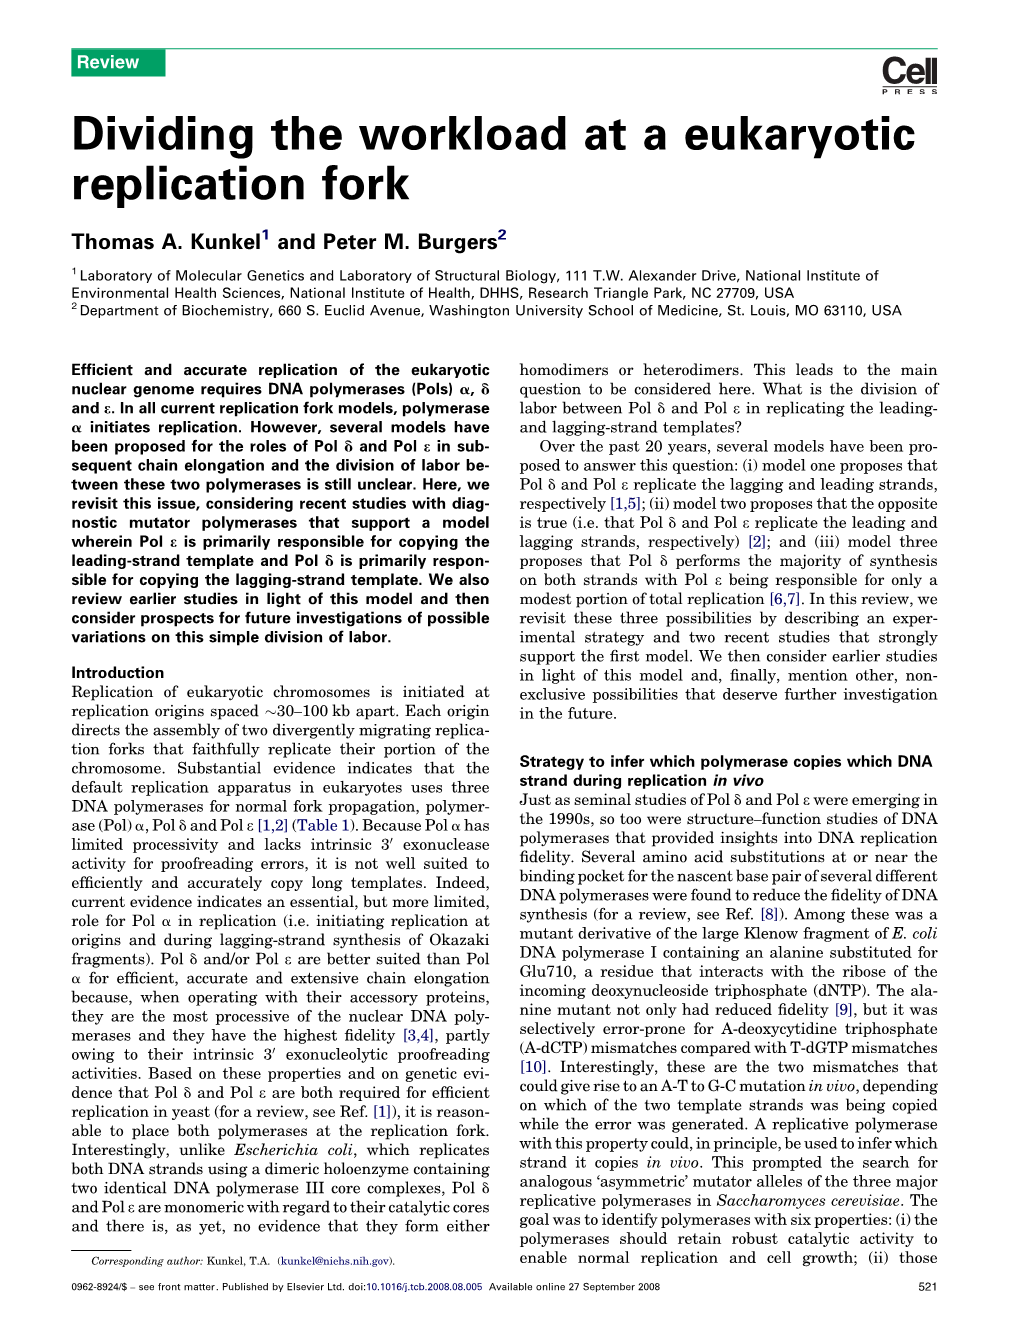 Dividing the Workload at a Eukaryotic Replication Fork